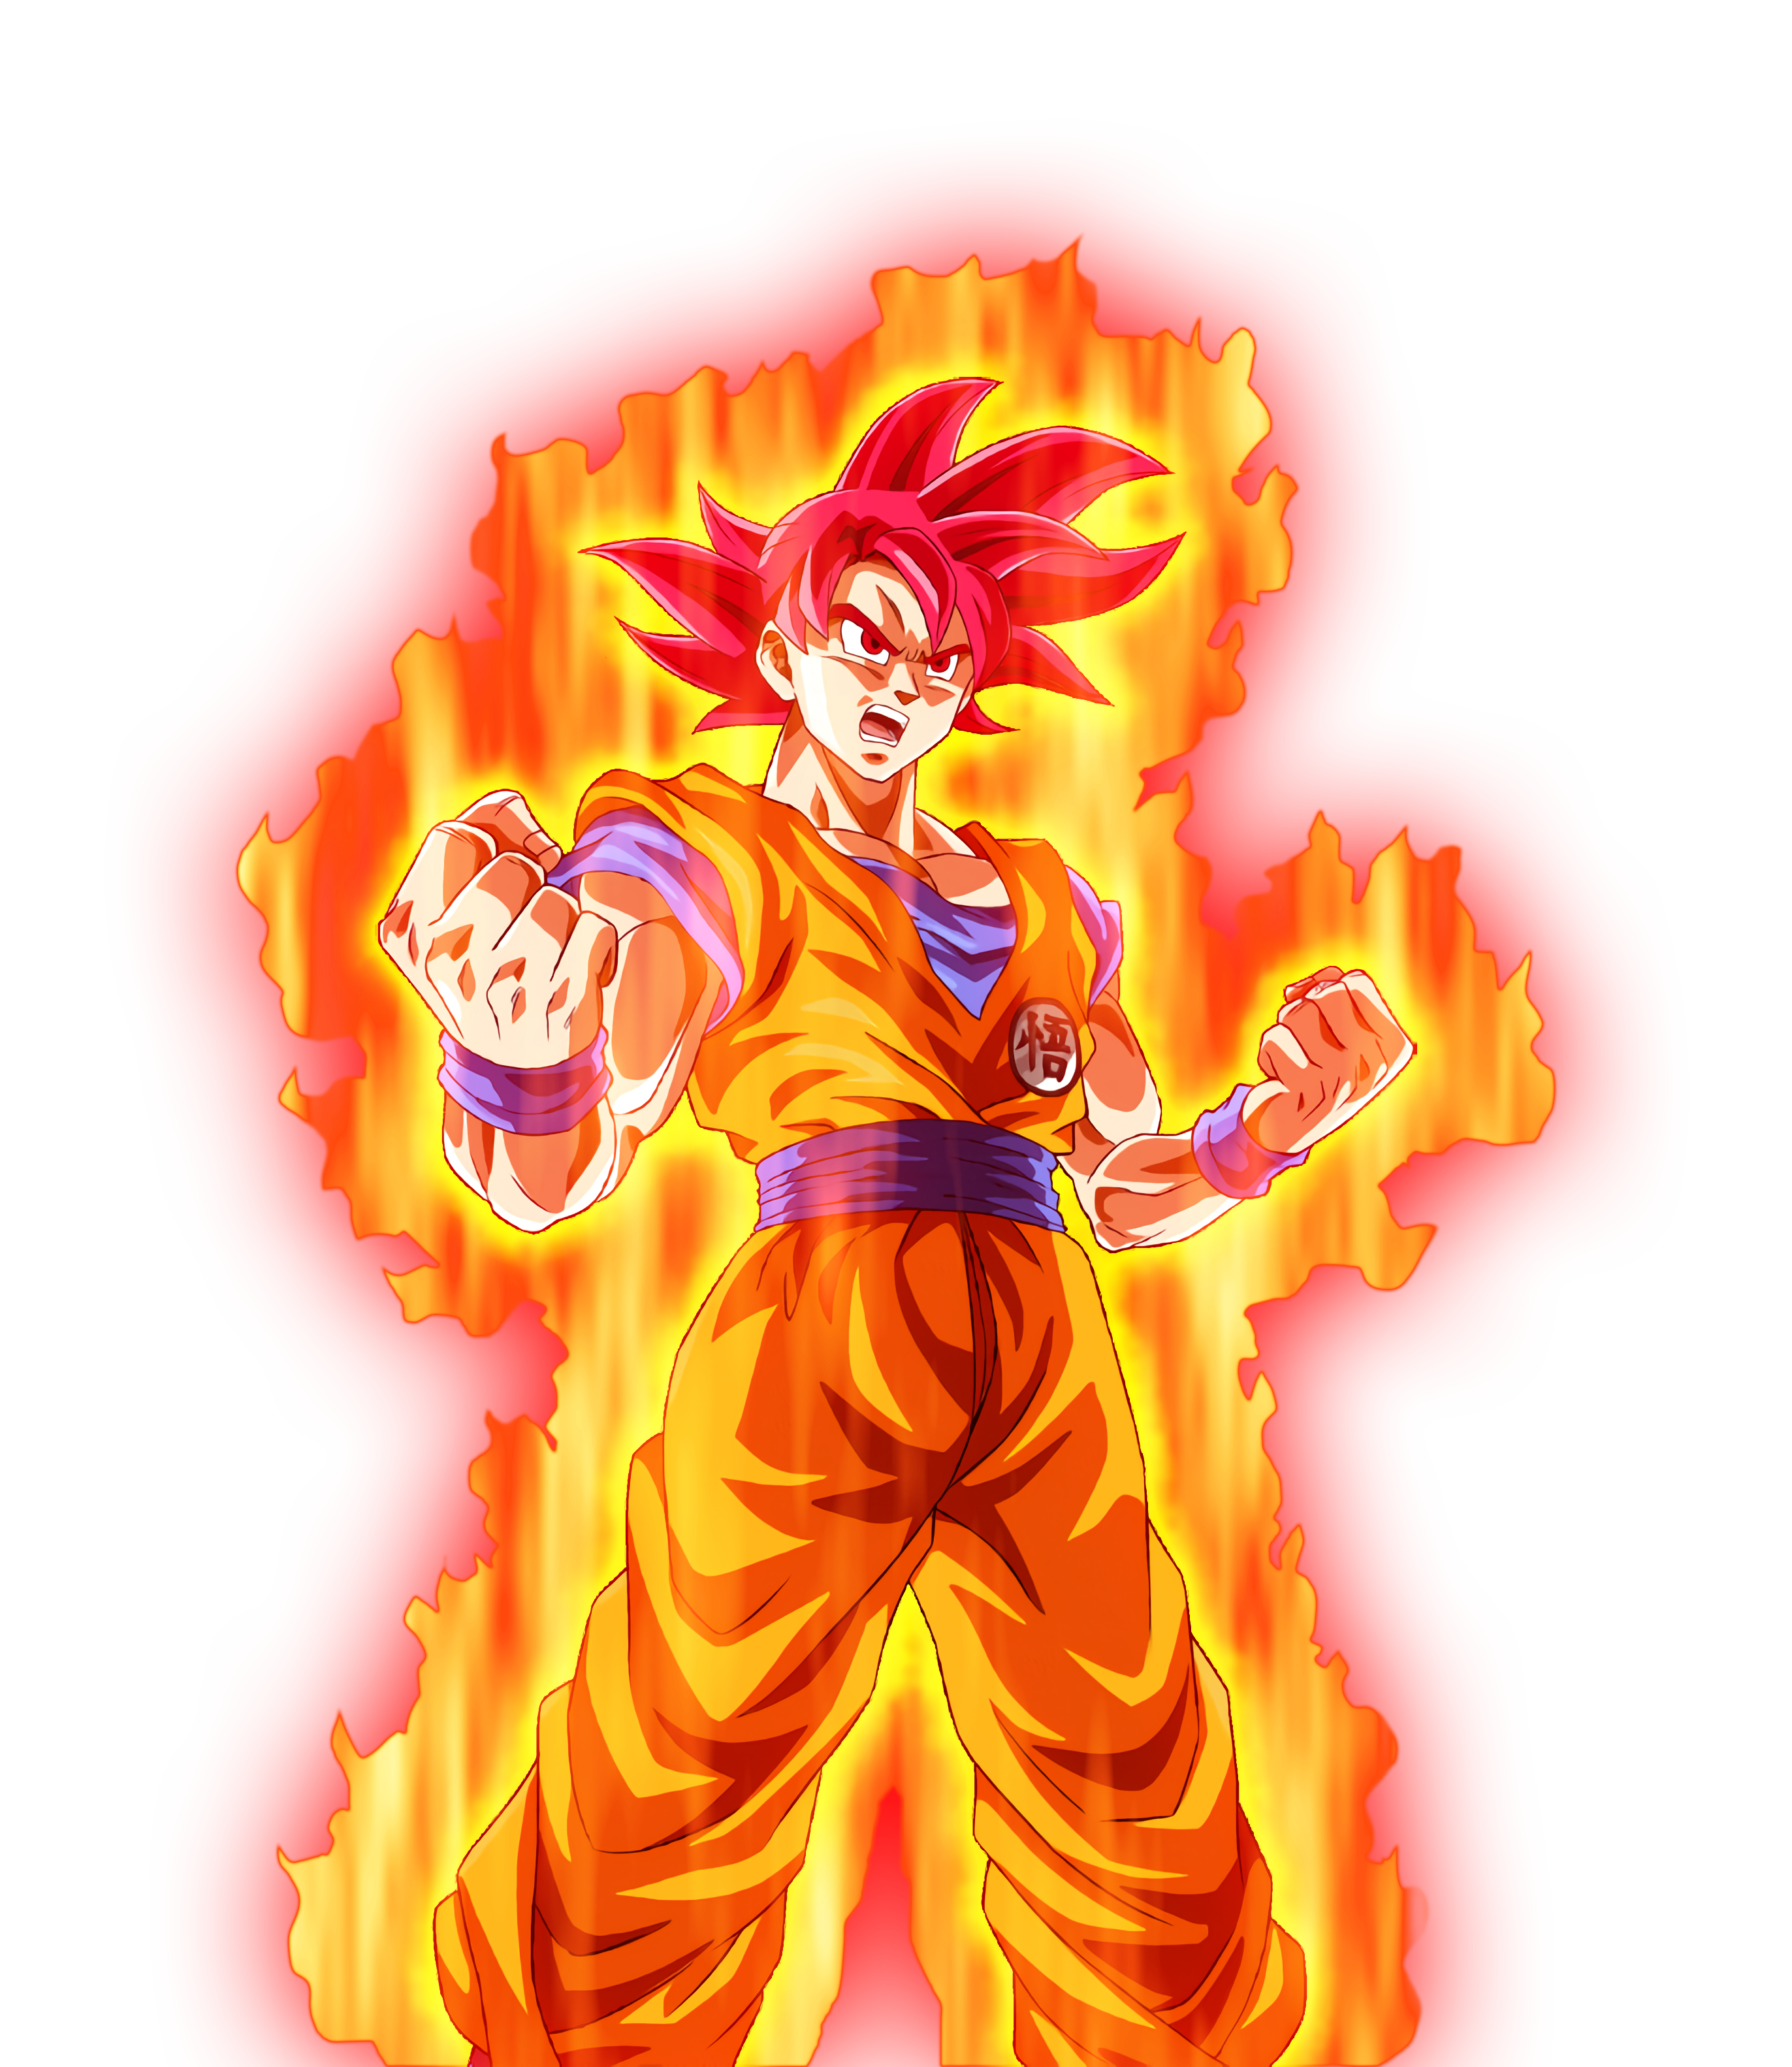 Super Saiyan God Goku by AbsolutelyYOSHAAA on DeviantArt